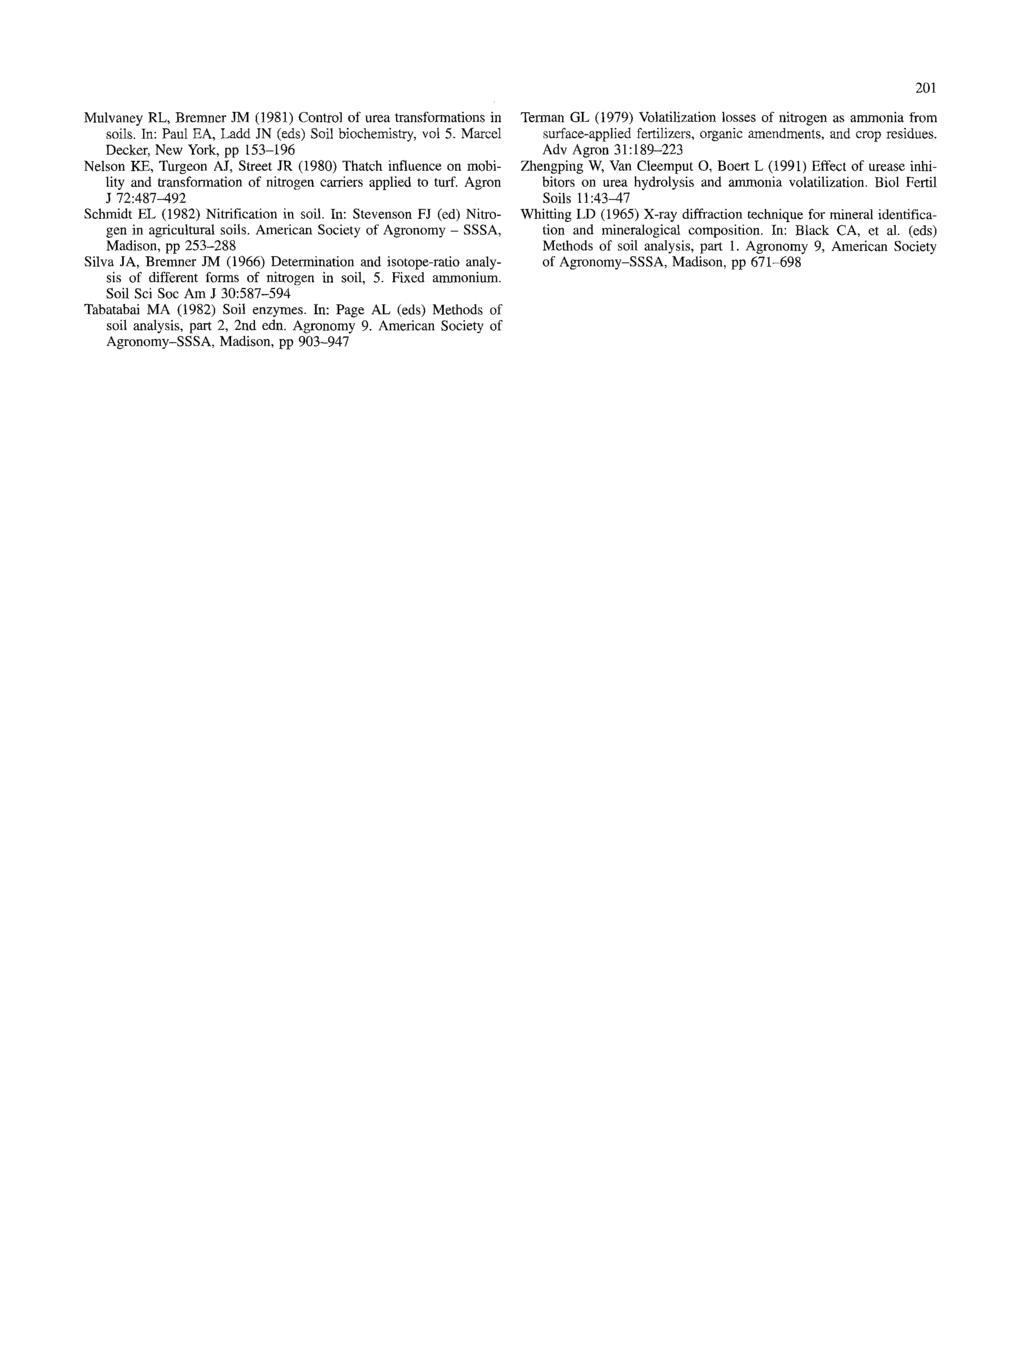 21 Mulvaney RL, Bremner JM (1981) Control of urea transformations in soils. n: Paul EA, Ladd JN (eds) Soil biochemistry, voi 5.